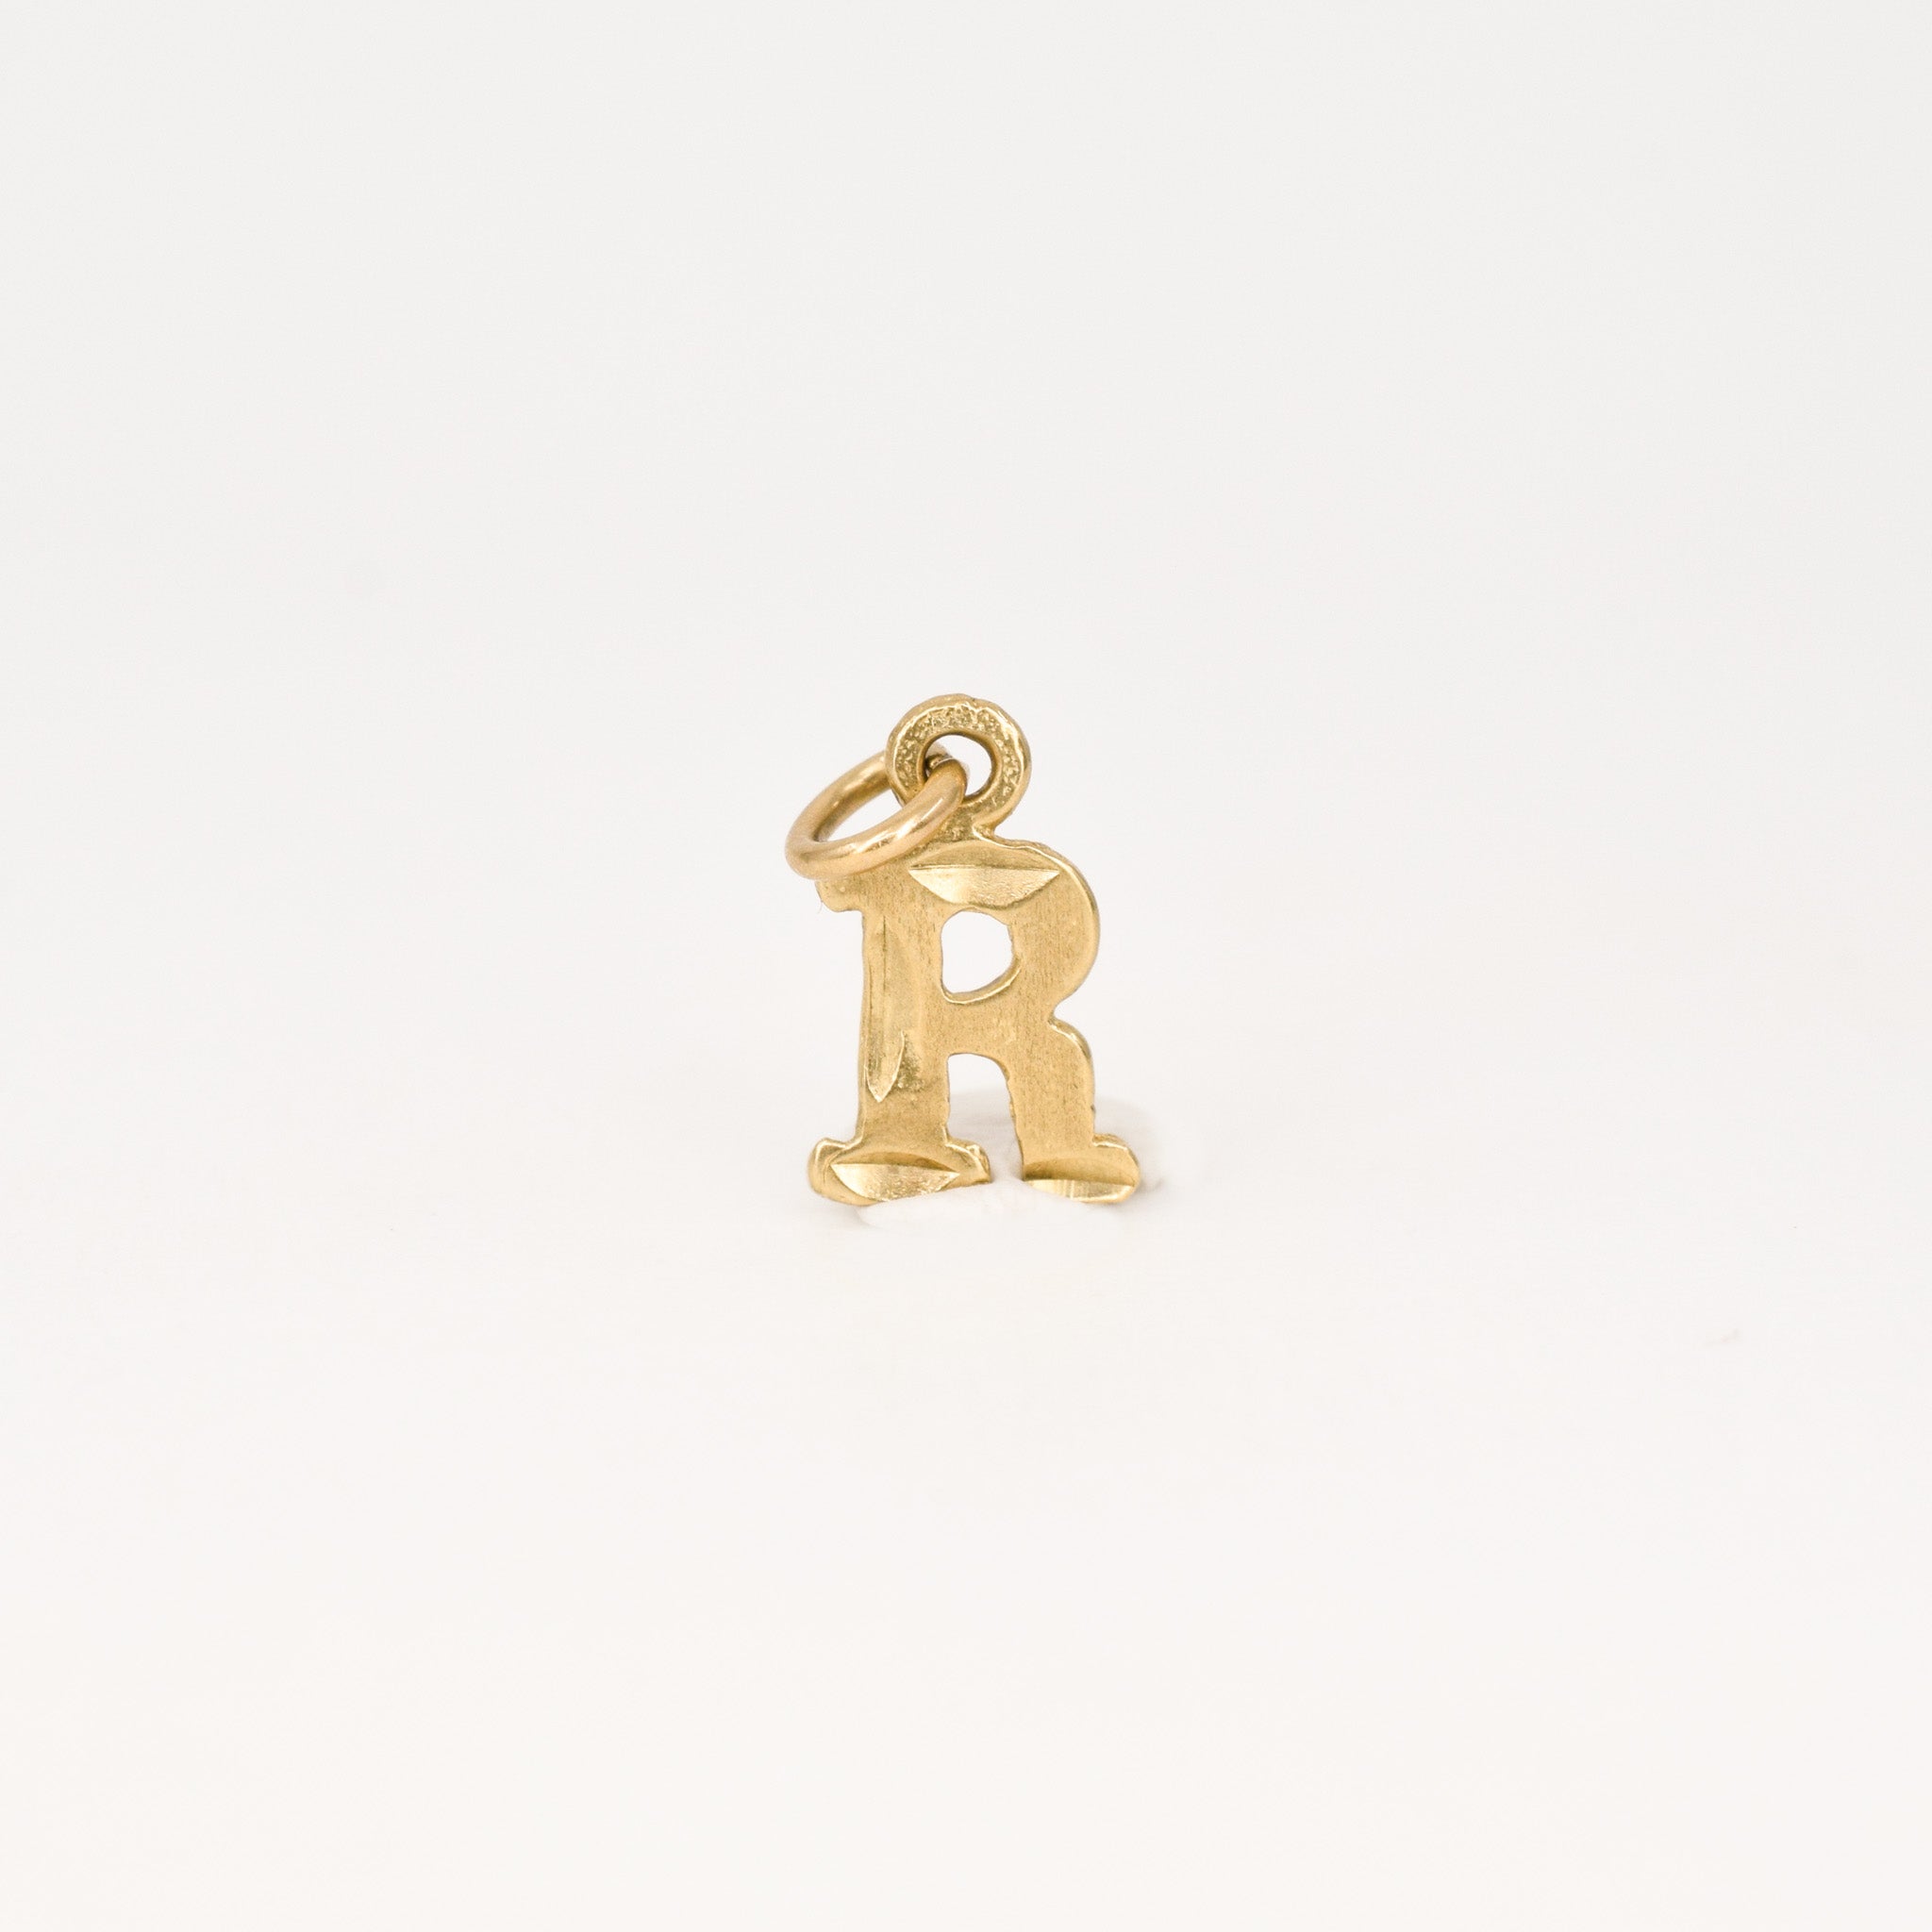 vintage 'r' gold charm pendant, folklor vintage jewelry canada